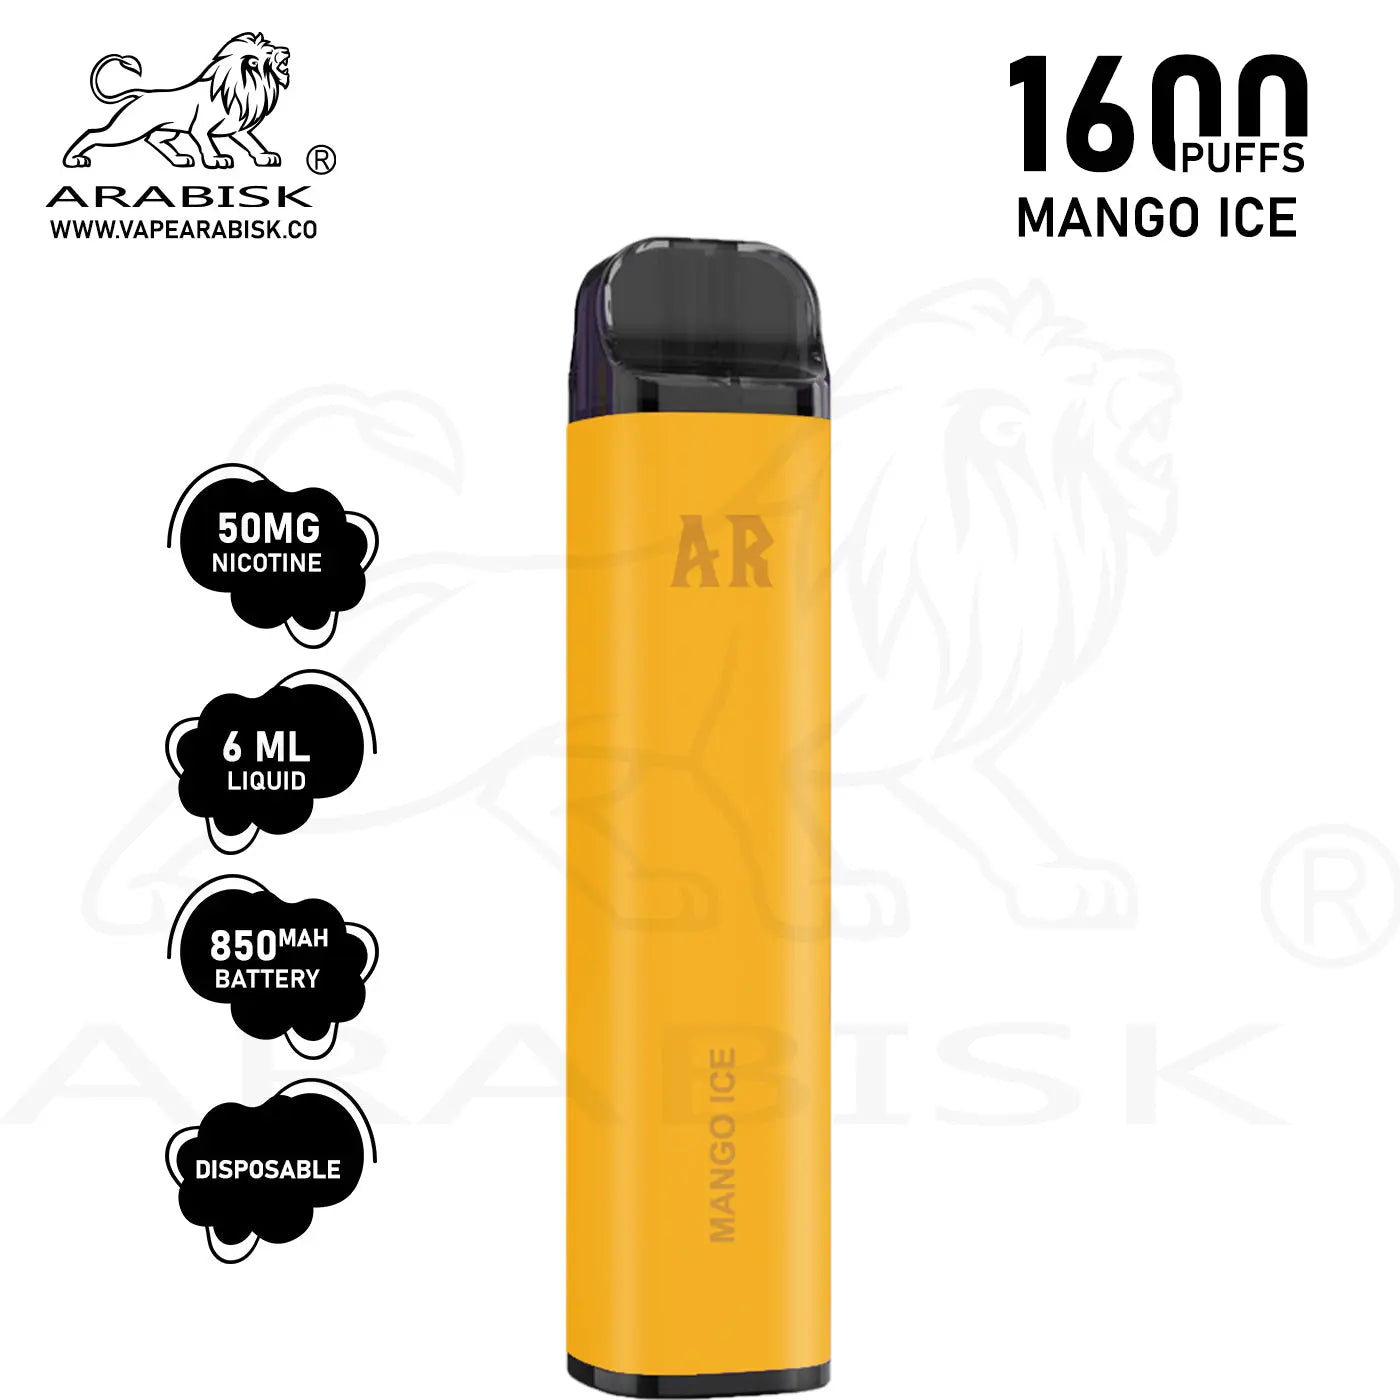 ARABISK AR 1600 PUFFS 50MG - MANGO ICE Arabisk Vape